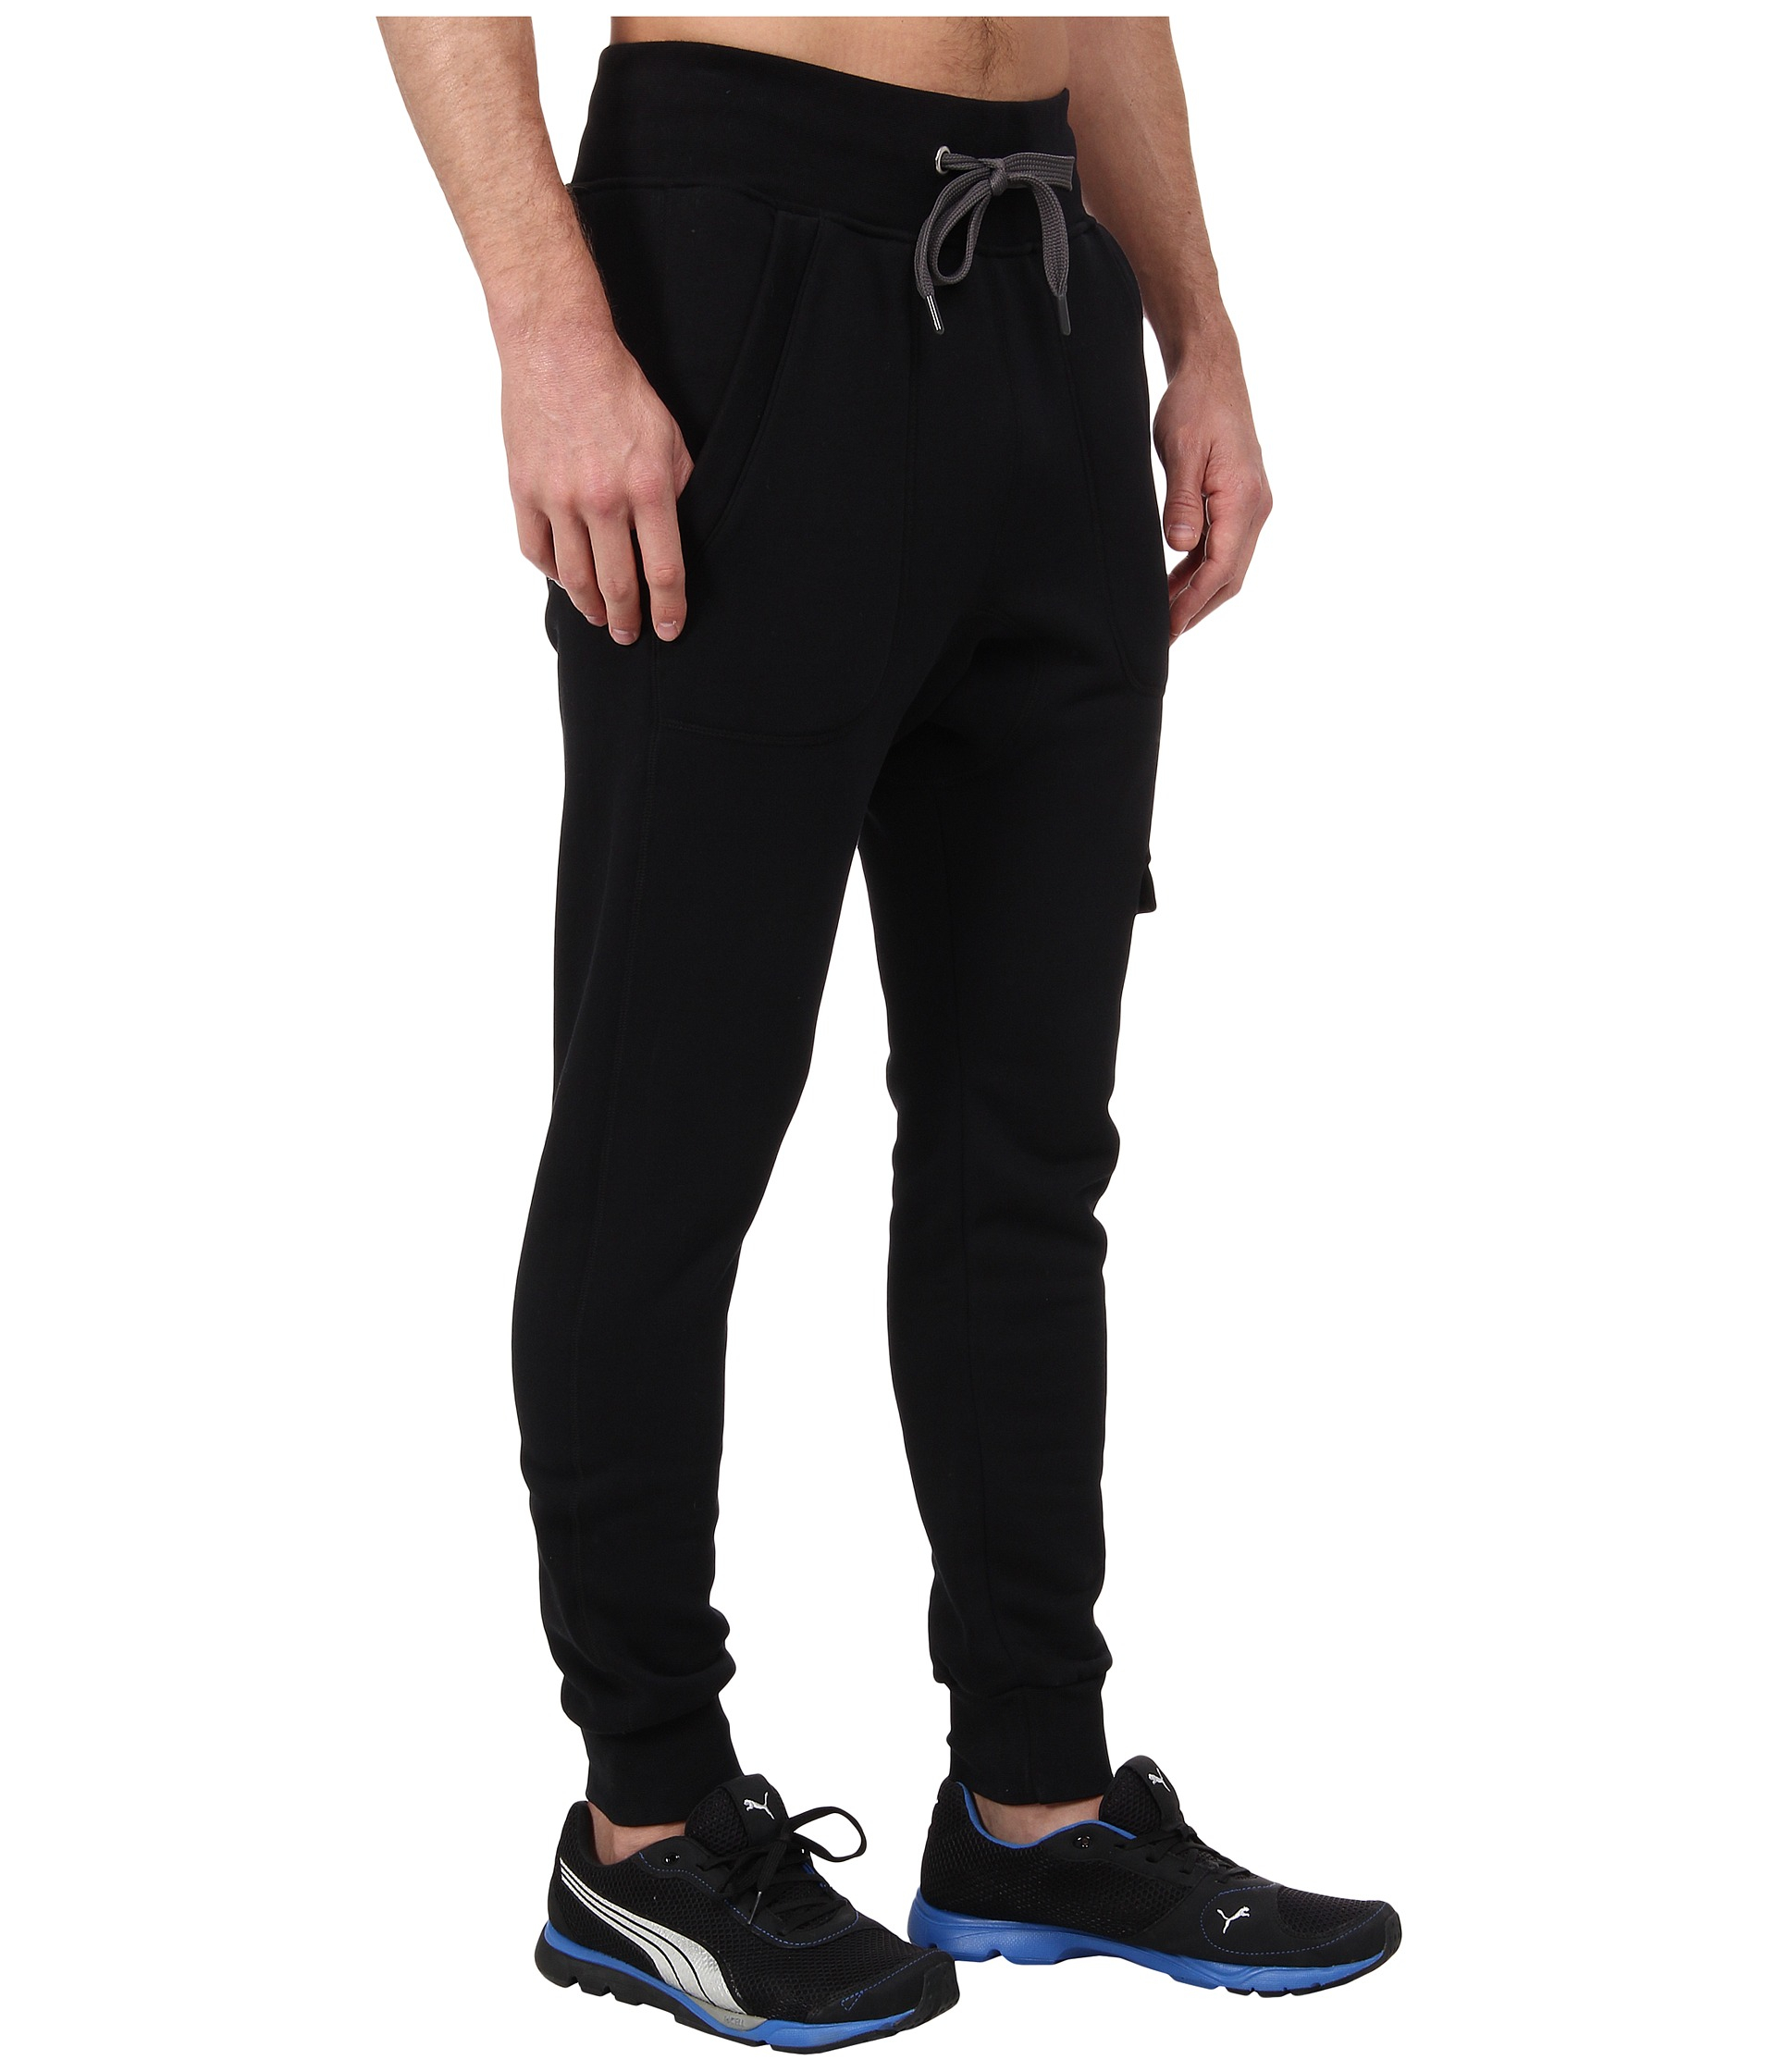 PUMA Cargo Sweat Pants in Black for Men - Lyst